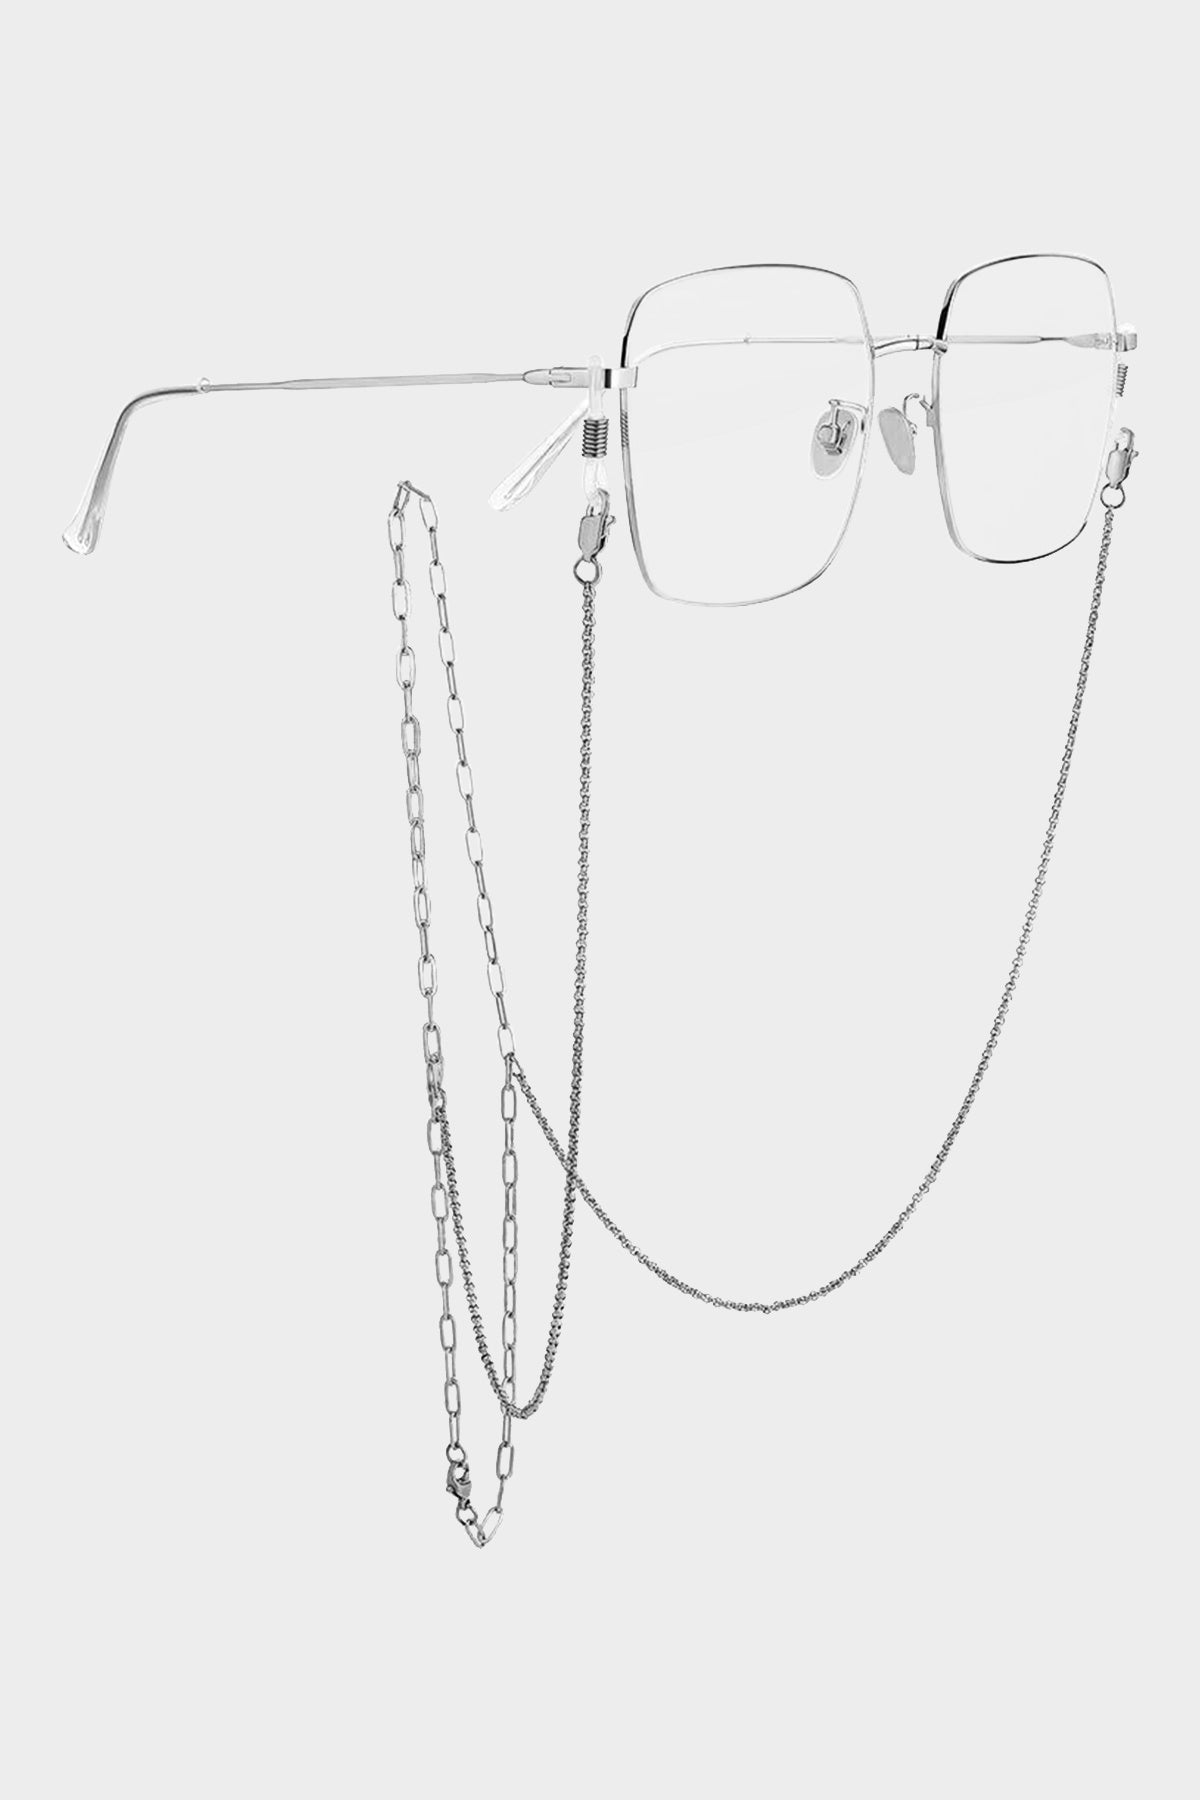 Staple 14K Silver Eyeglass Holder Necklace Chain